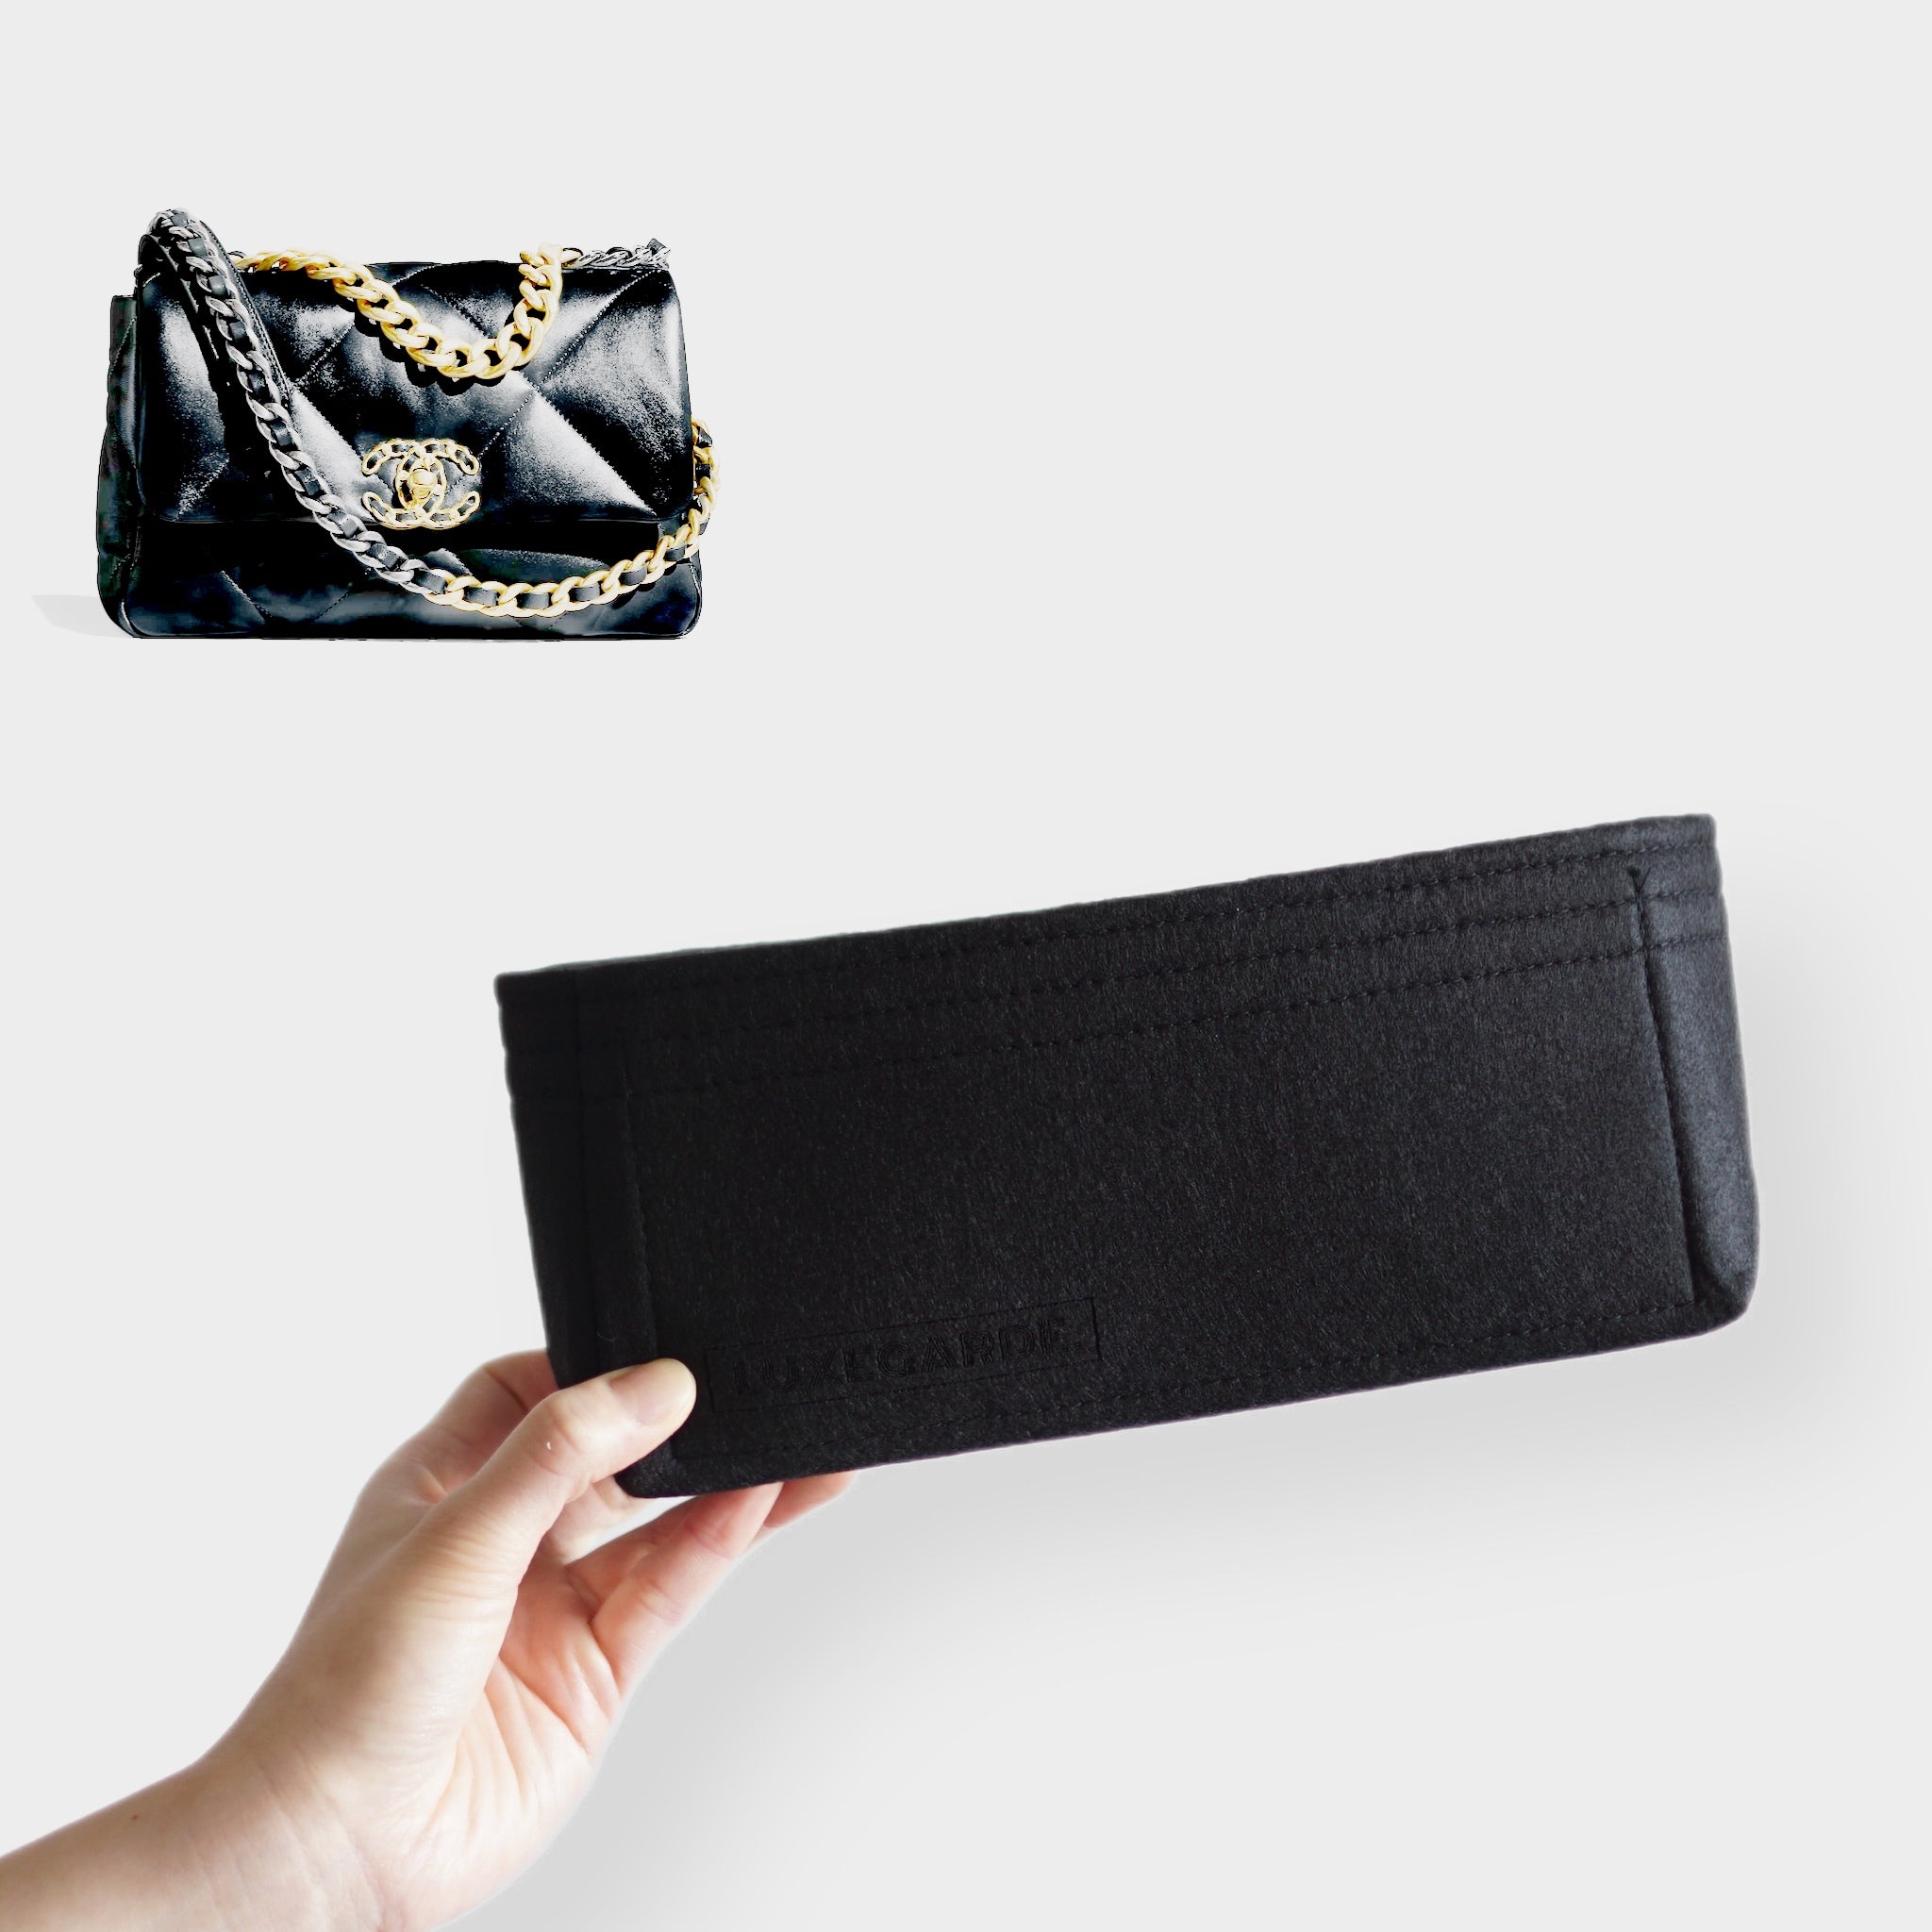 Felt Bag Insert Organizer for Chanel woc liner chain bag lining storage bag  insert 3005-black